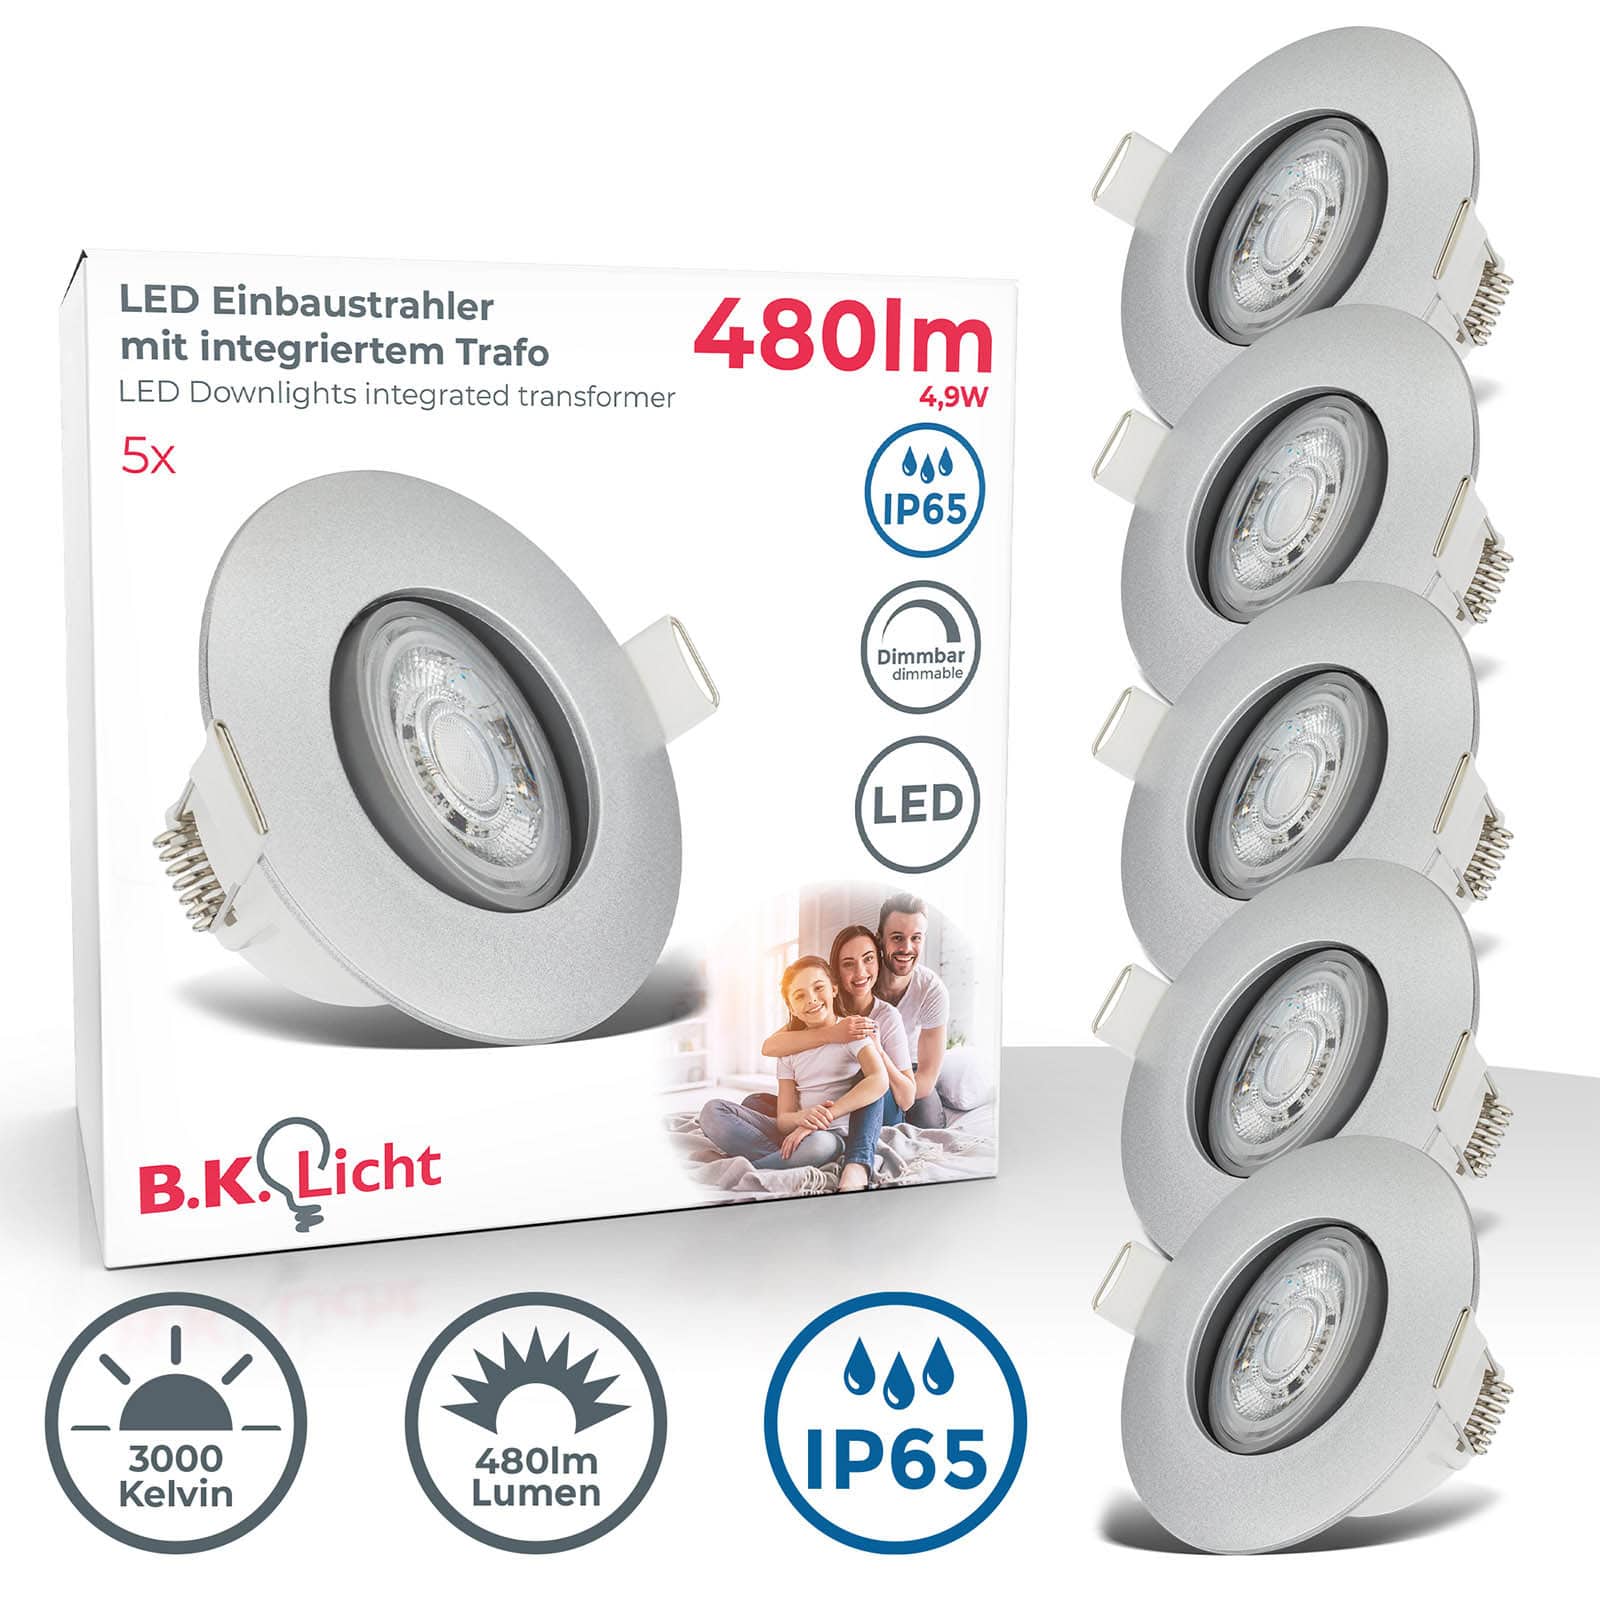 B.K.Licht 3x LED Bad-Einbaustrahler BKL1275 IP44